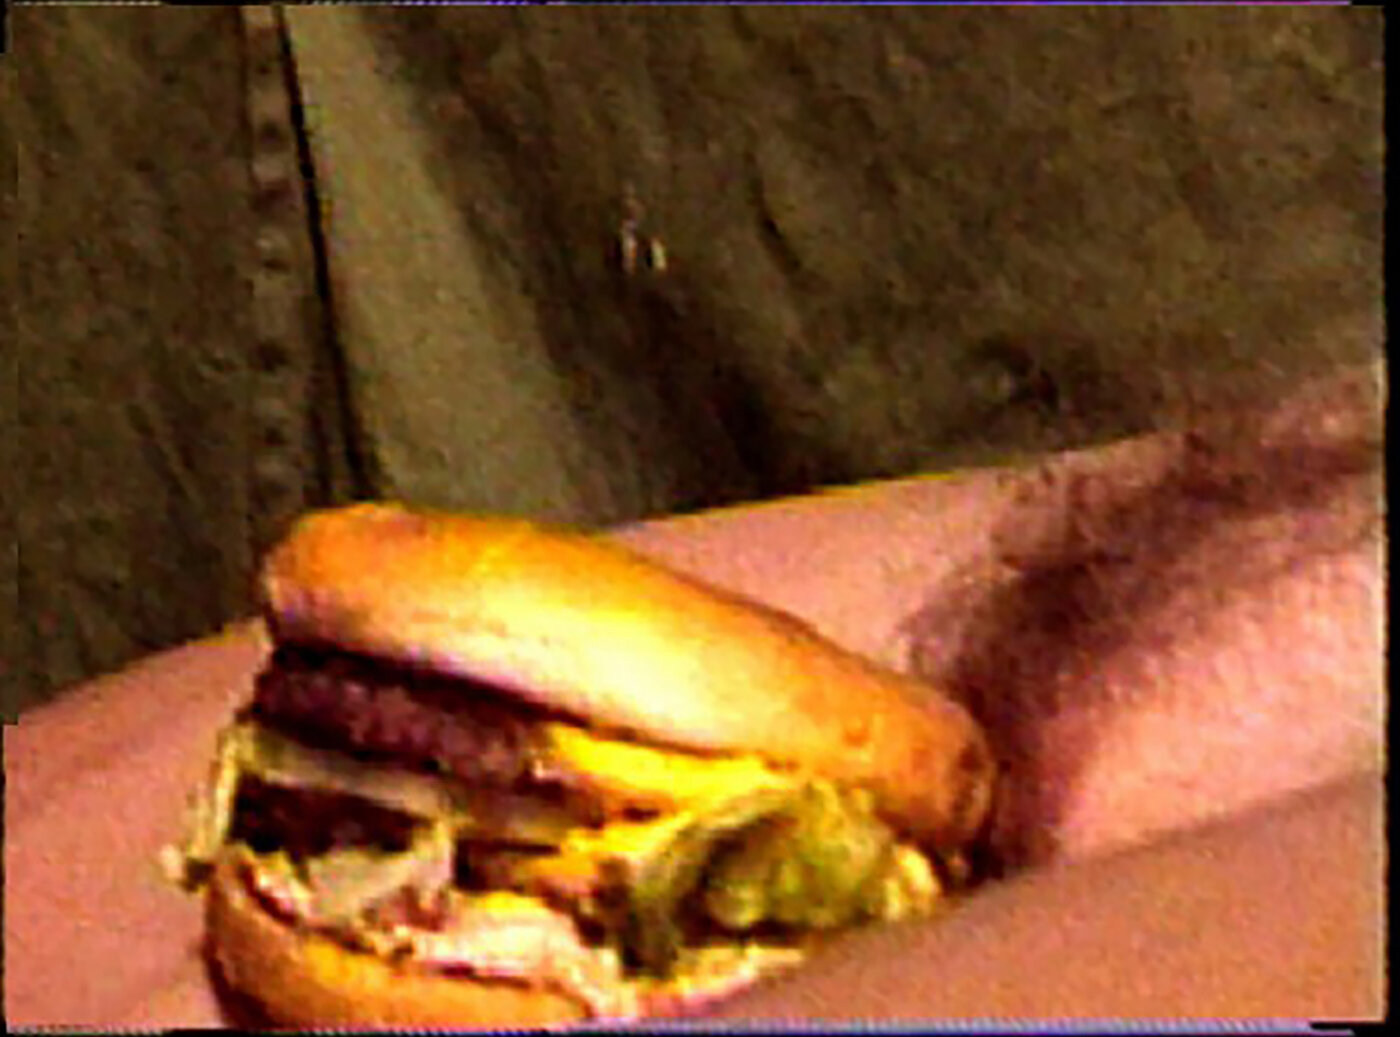 cheeseburger ***** unknown or error